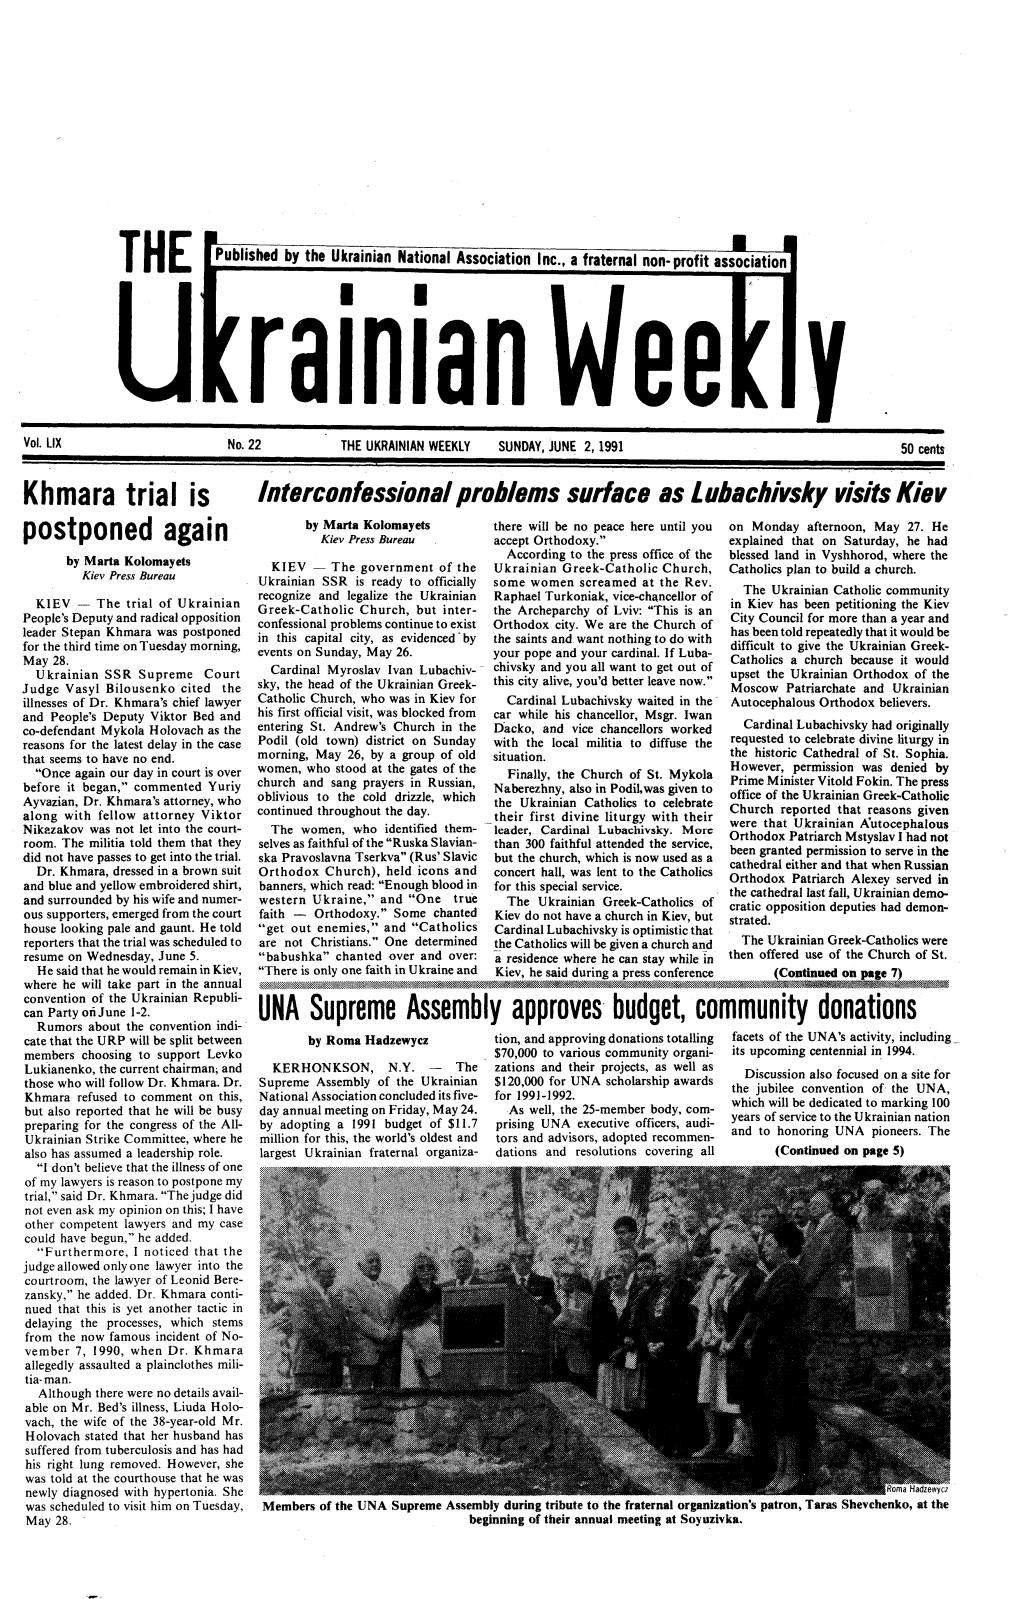 The Ukrainian Weekly 1991, No.22